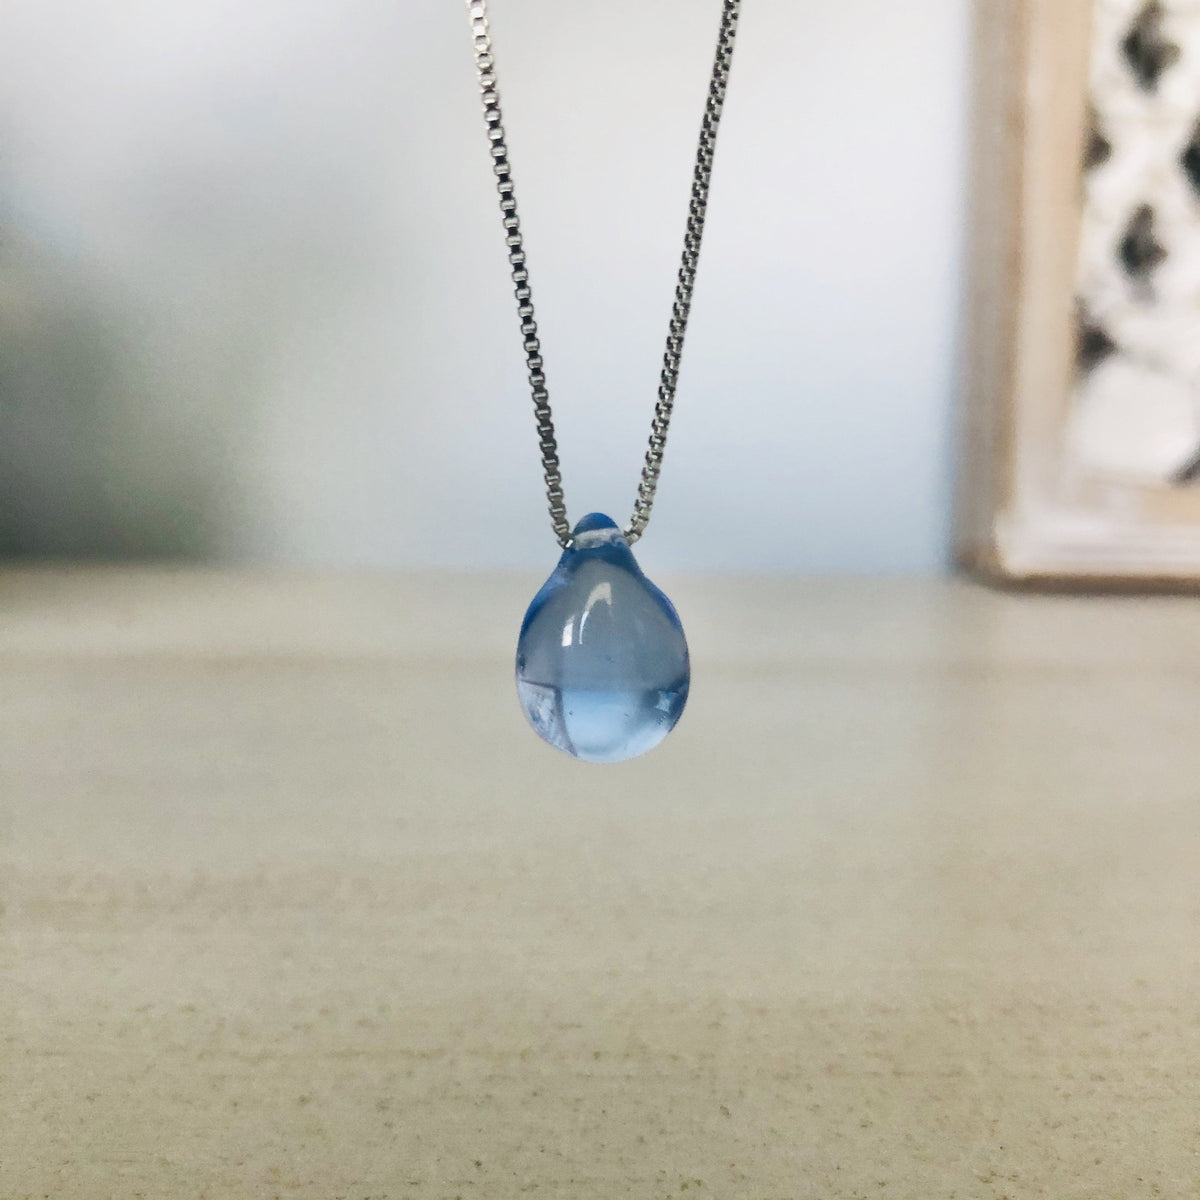 Indian-Shelf Glass pendant for Jewellery Making | Lampwork Glass Pendant |  Pendant for Necklace | Glass pendant | Round Spiral Glass pendant | Black  Lampwork Glass Pendant - 2 Pack : Amazon.in: Home & Kitchen